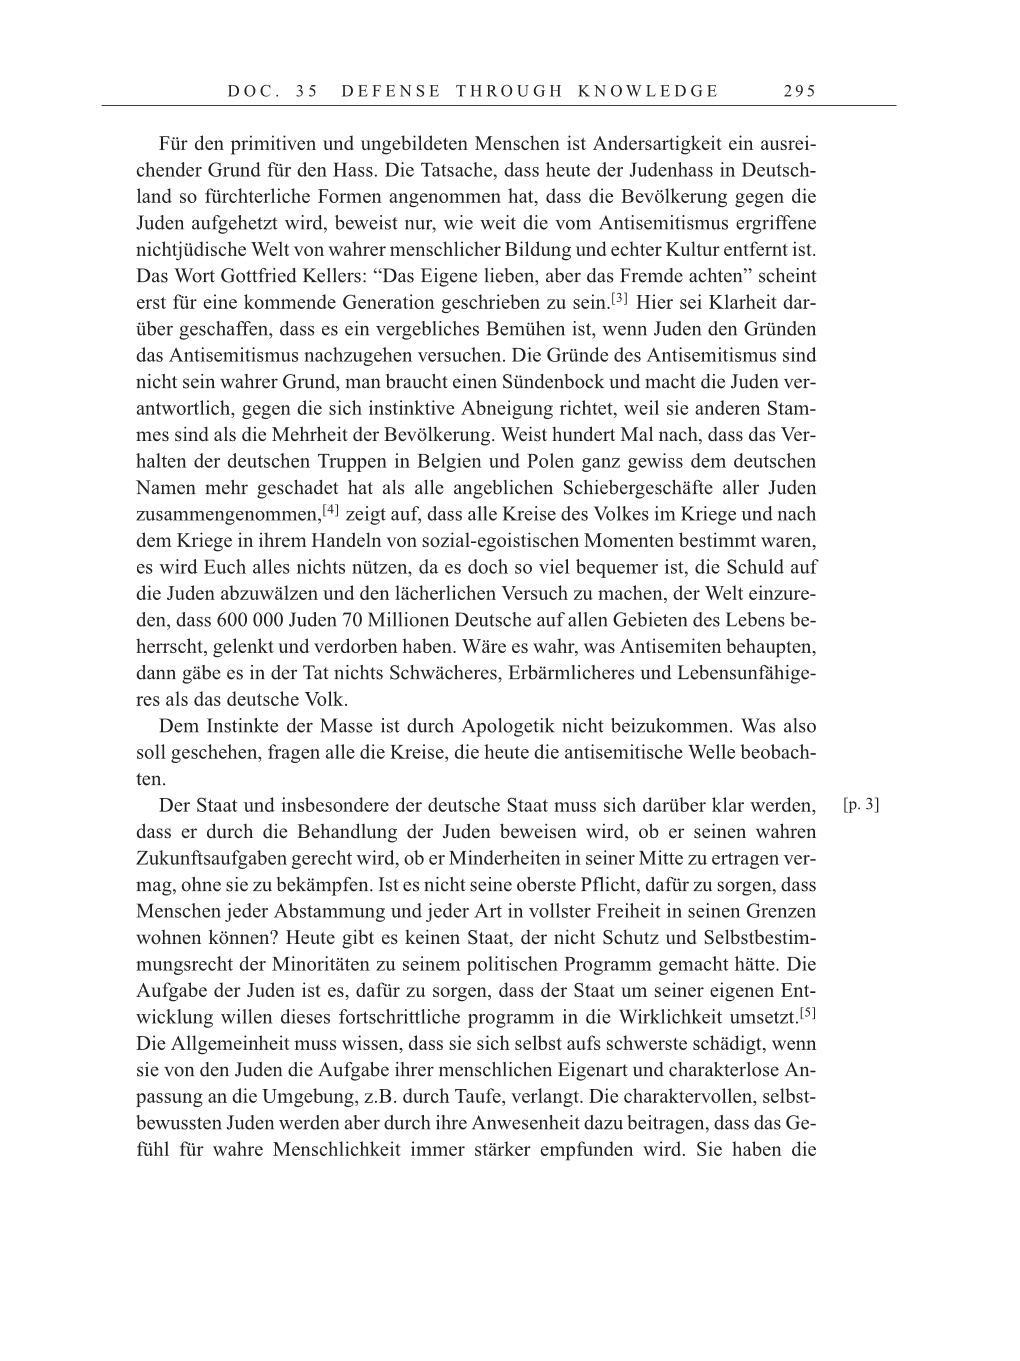 Volume 7: The Berlin Years: Writings, 1918-1921 page 295